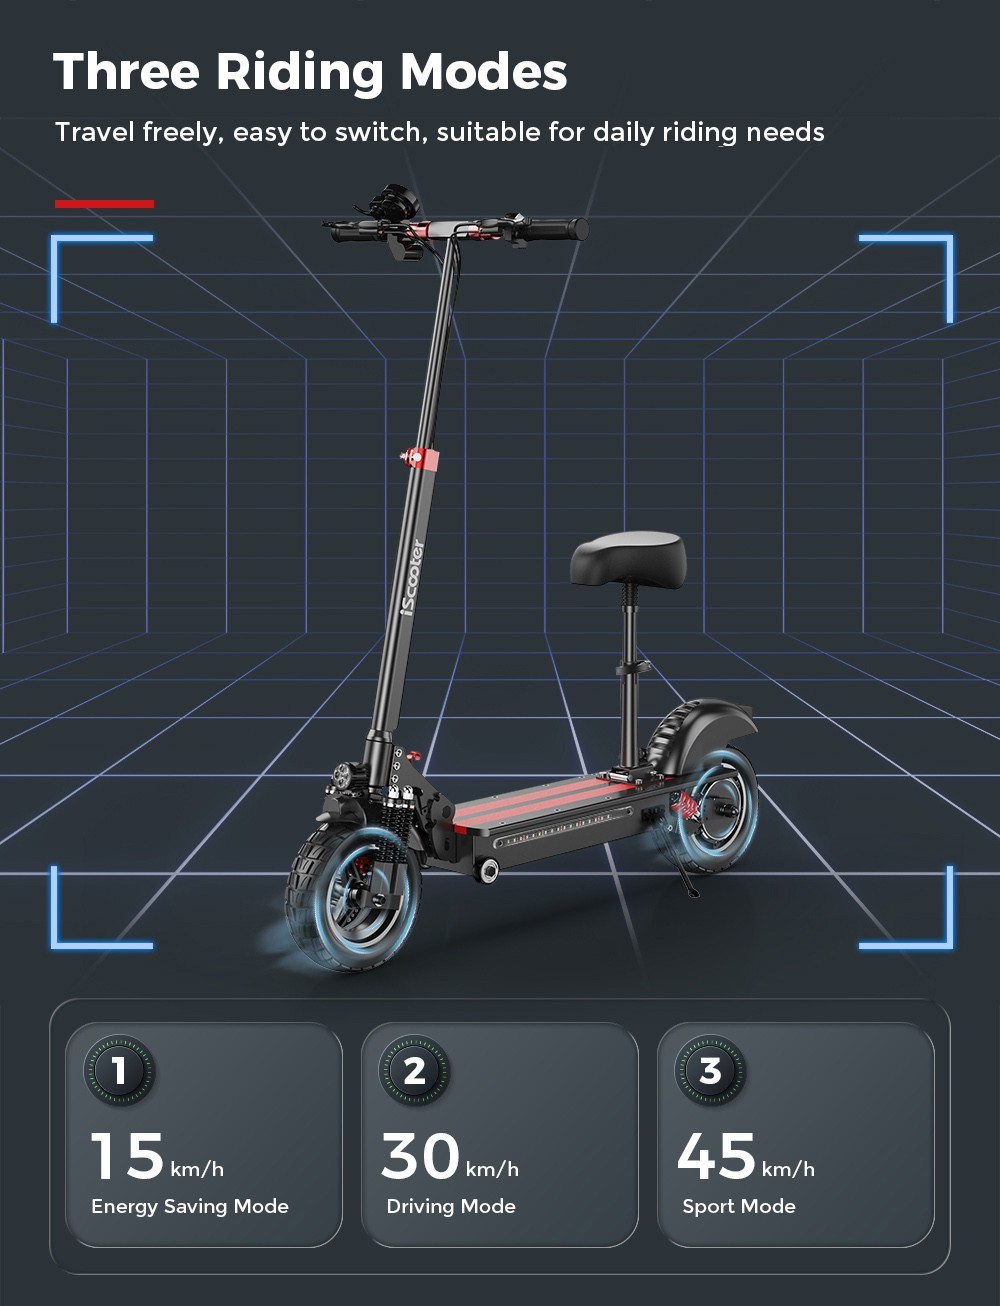 iTrottinette iX5 10-inch all-terrain electric scooter